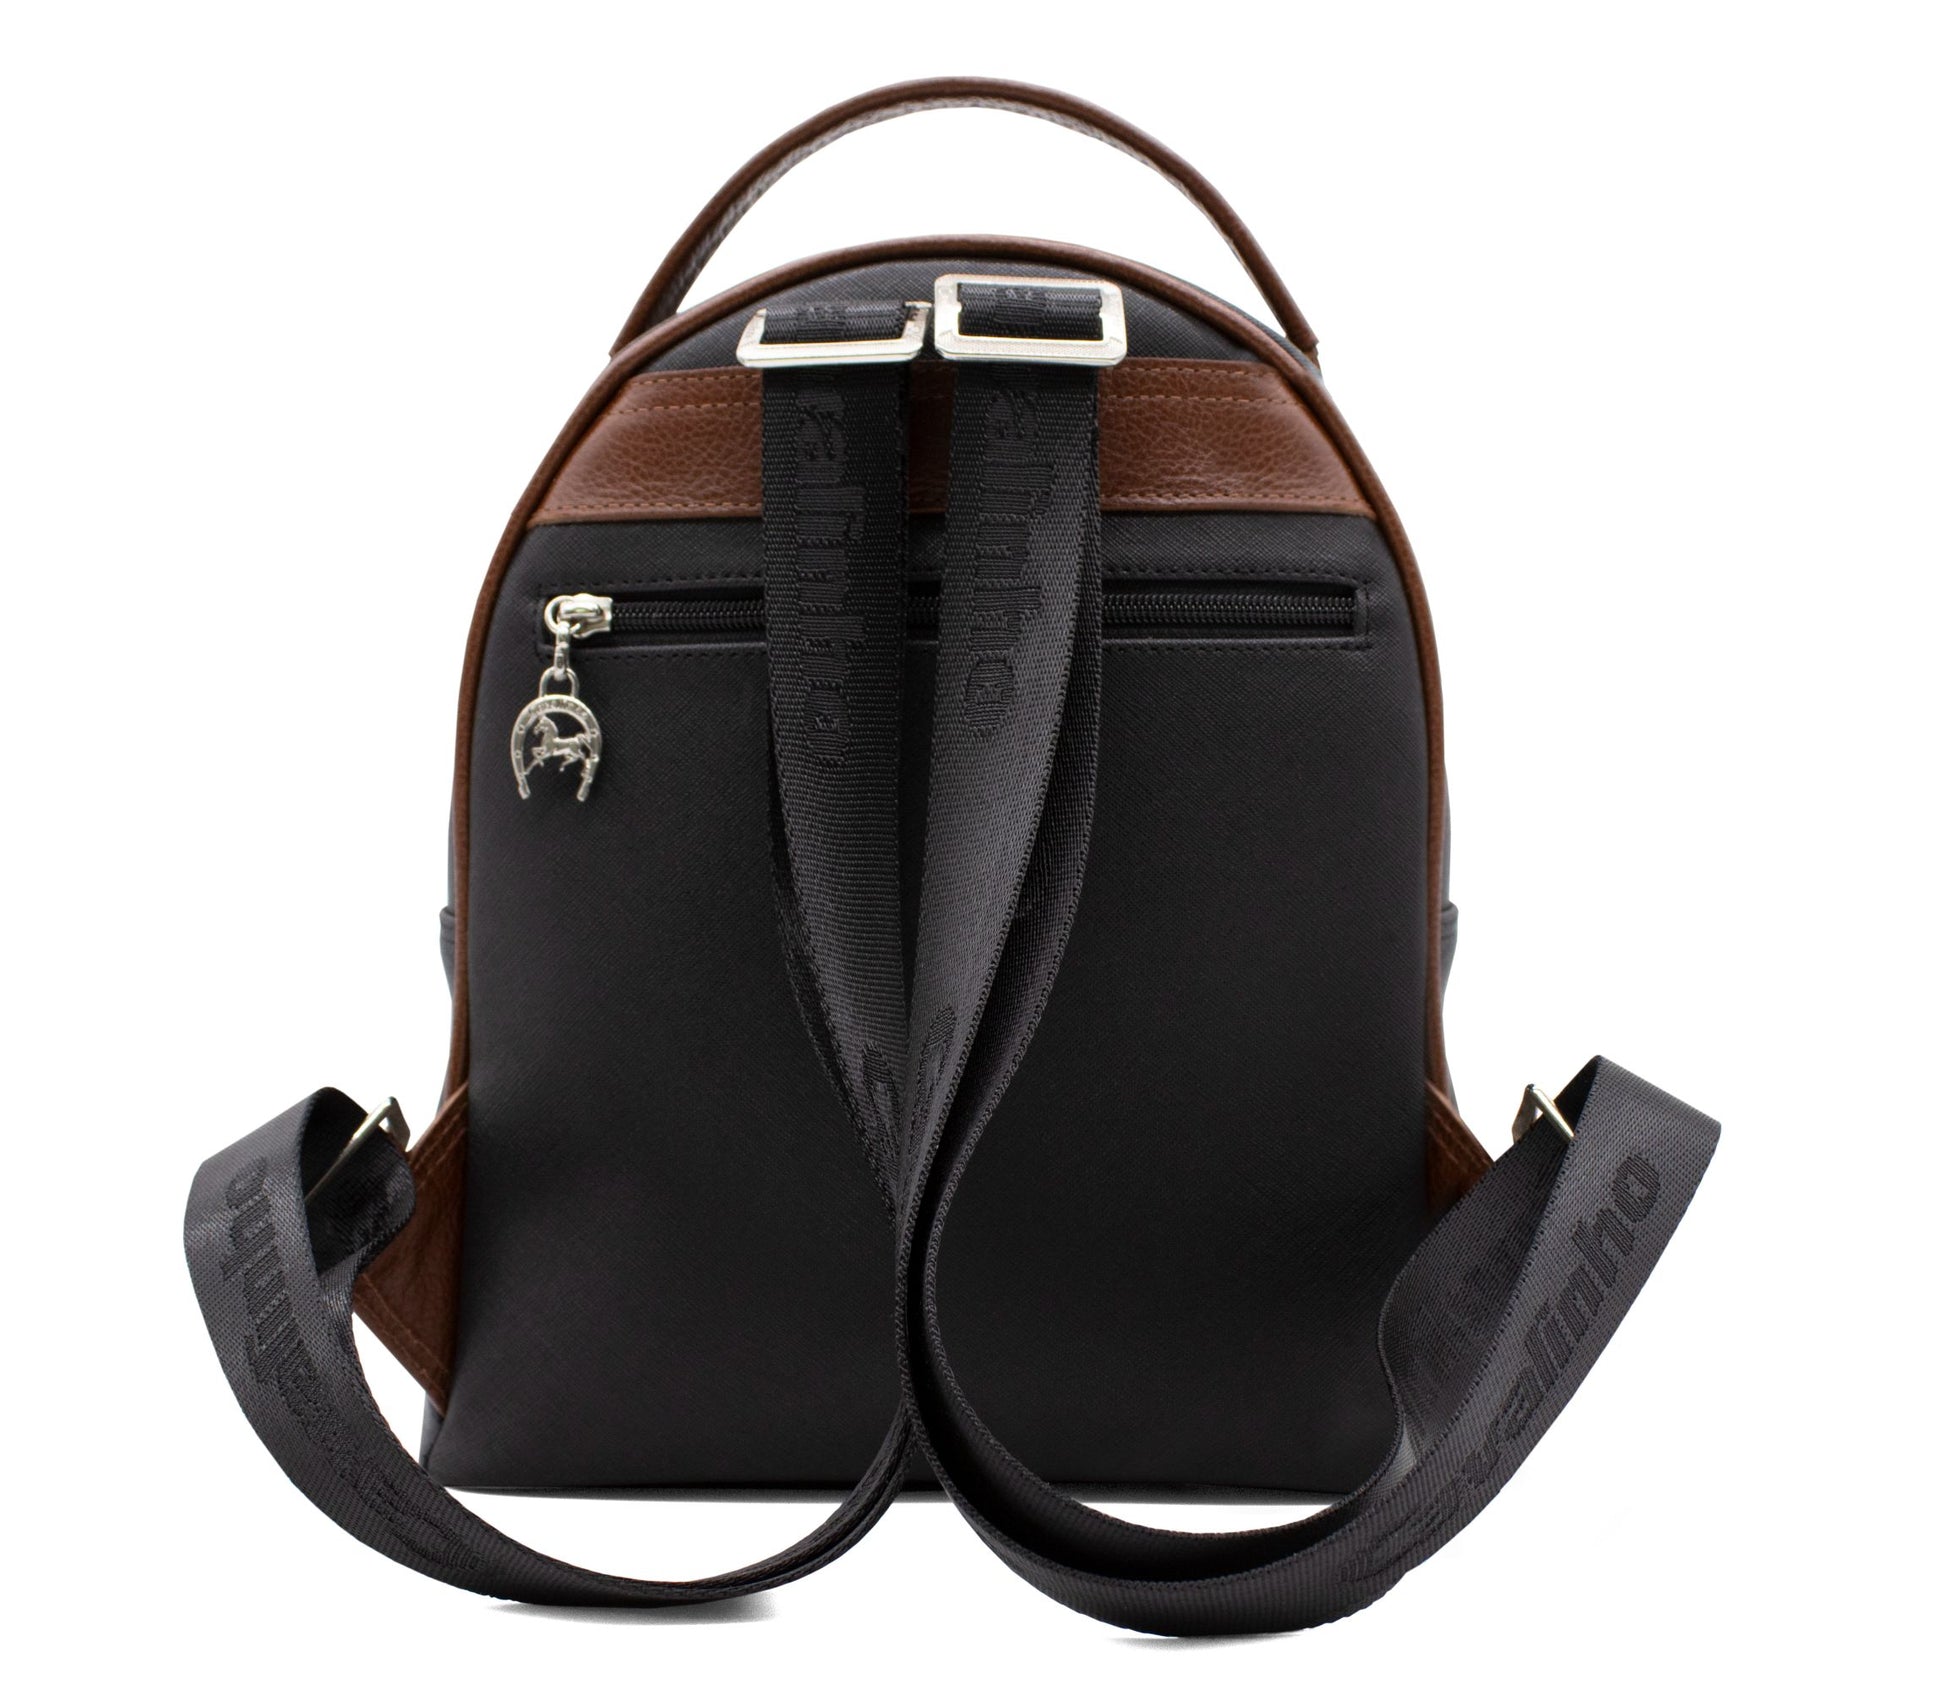 Cavalinho Lively Backpack - Black / Beige / White / SaddleBrown - 18130207.21_3